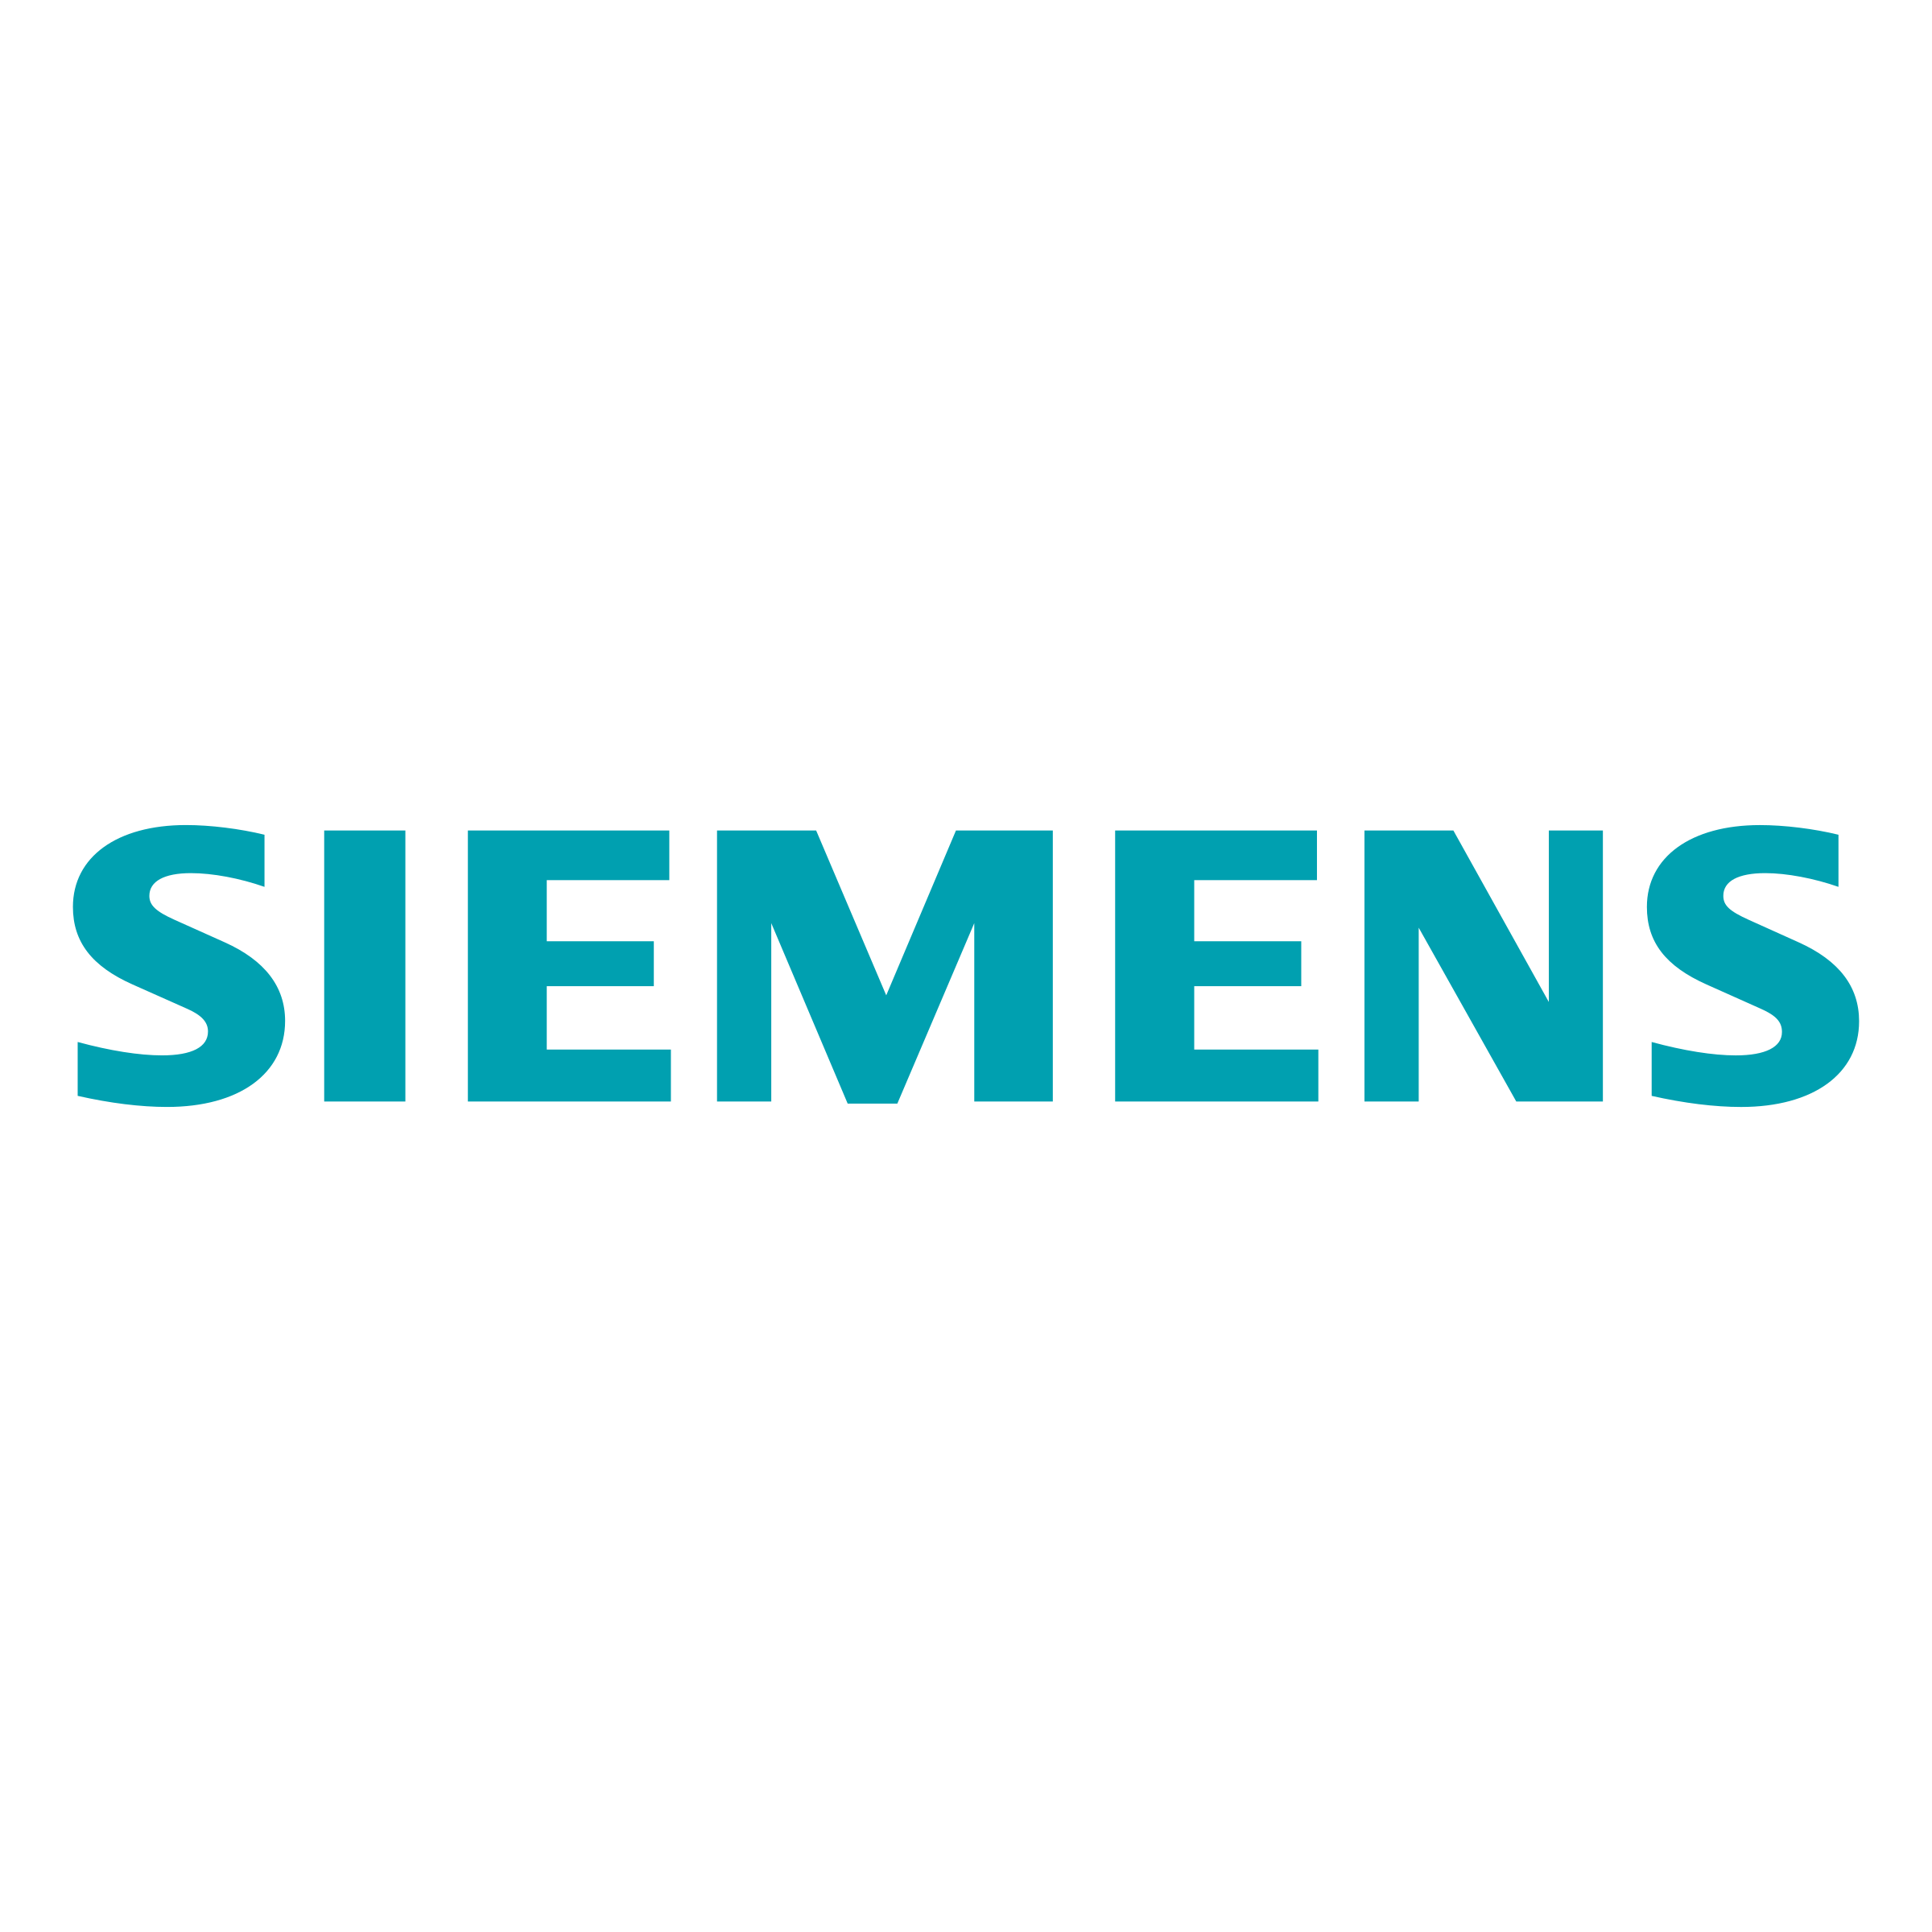 Siemens | Brands Of The World